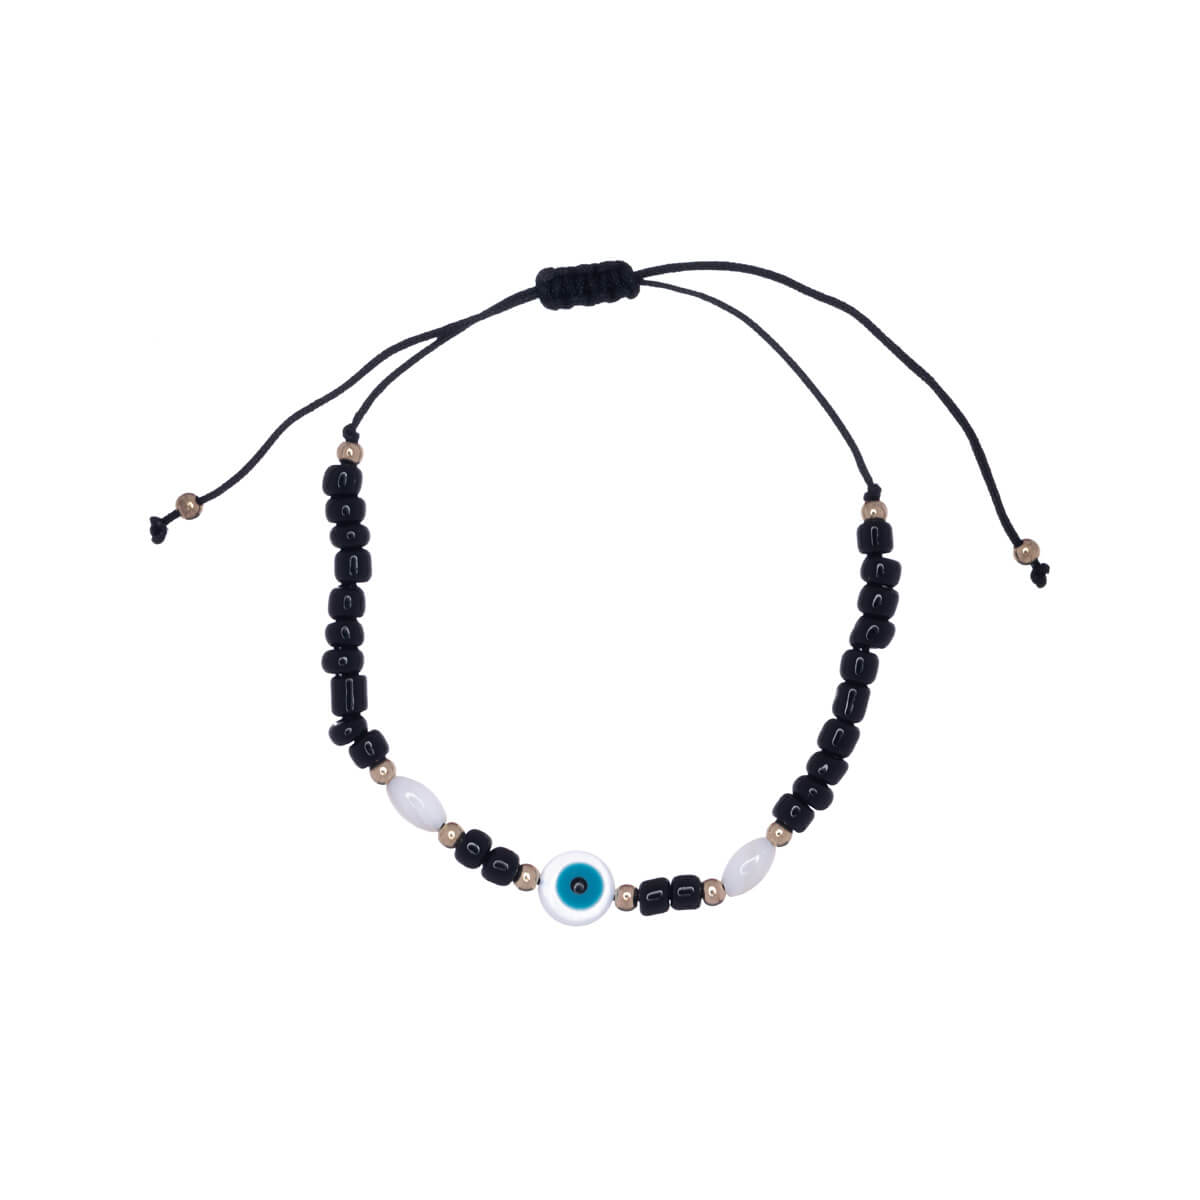 Coloured evil eye bracelet with beads